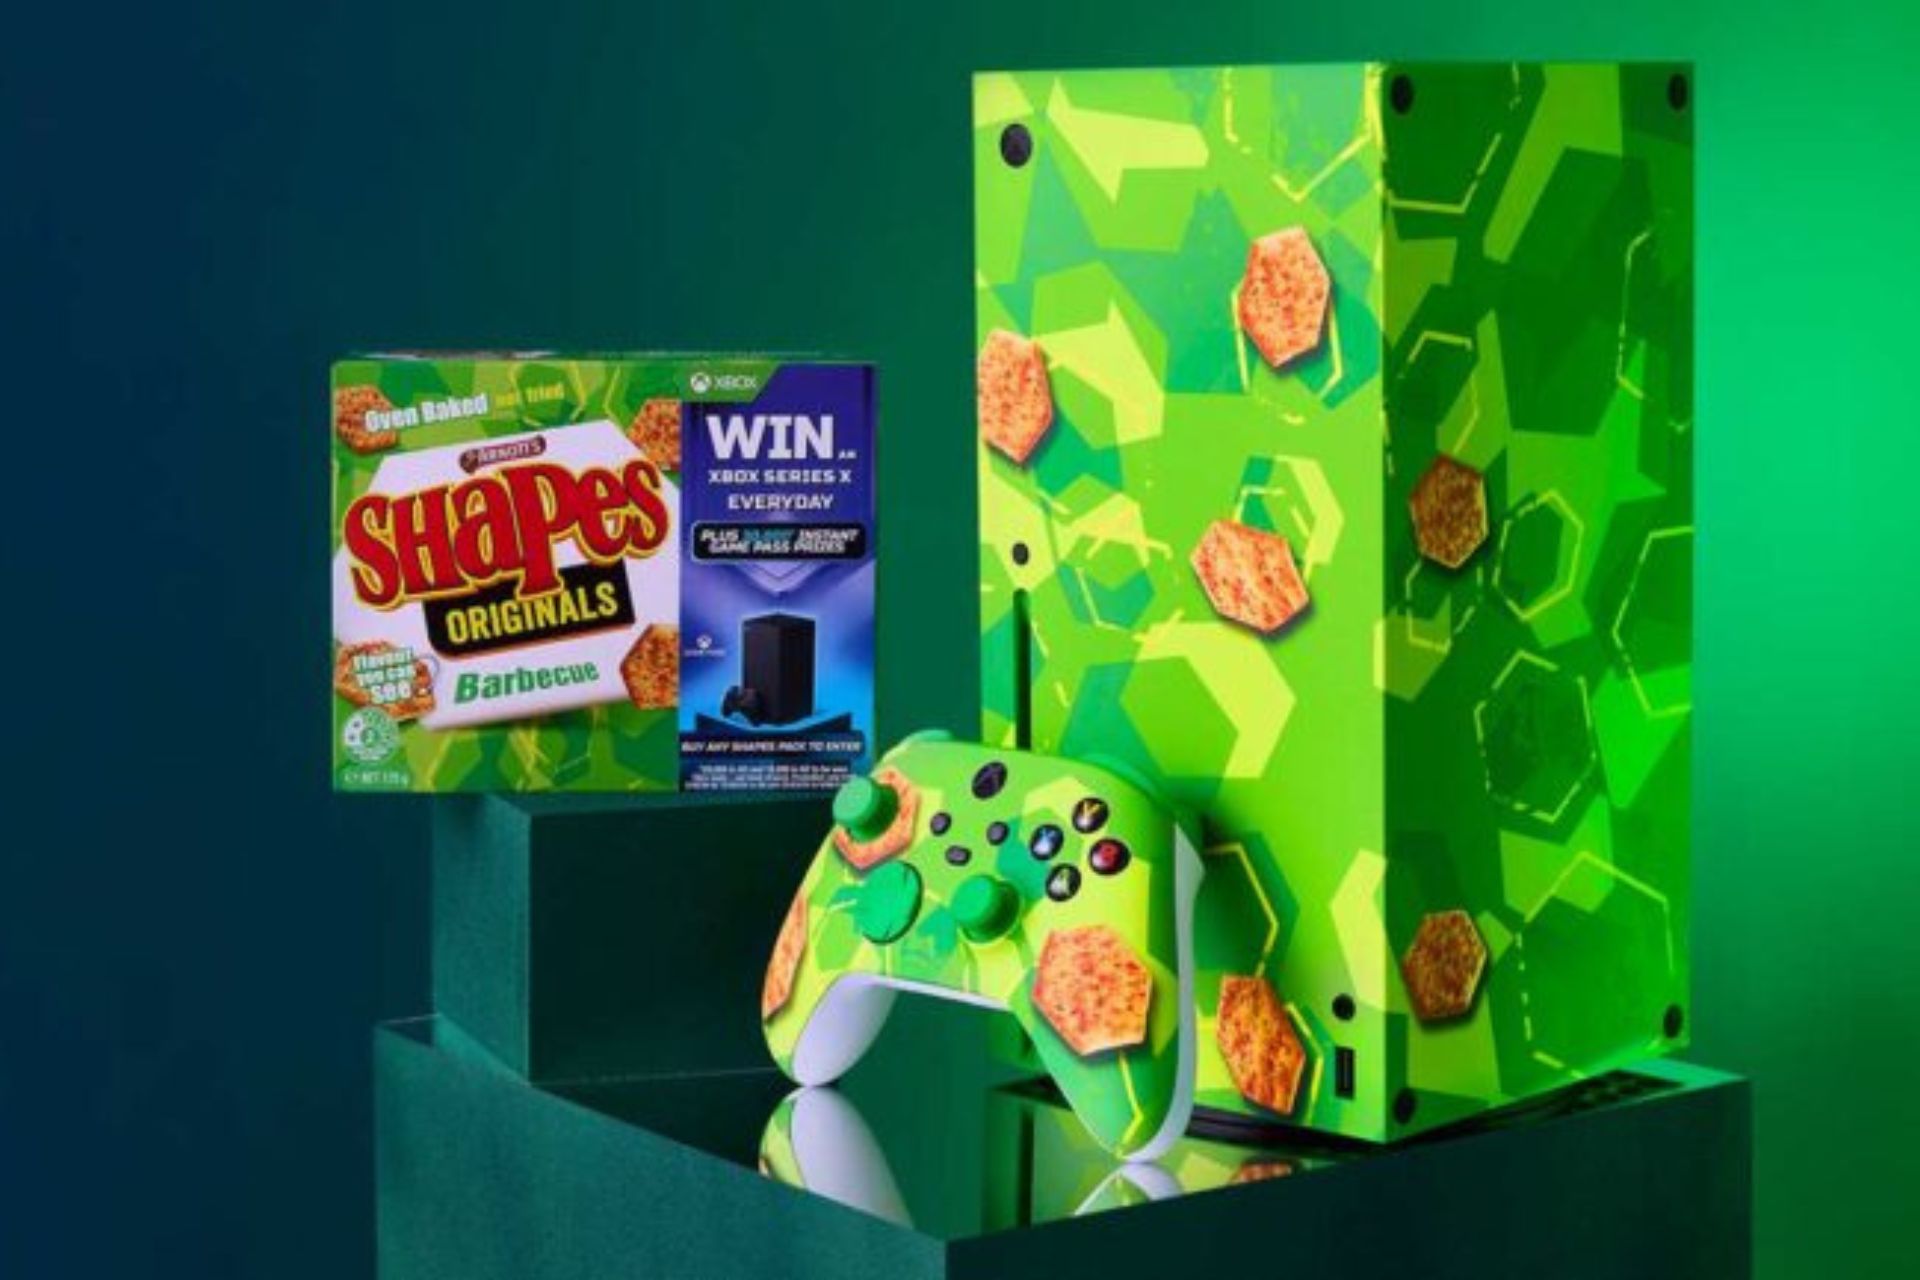 Xbox X shapes